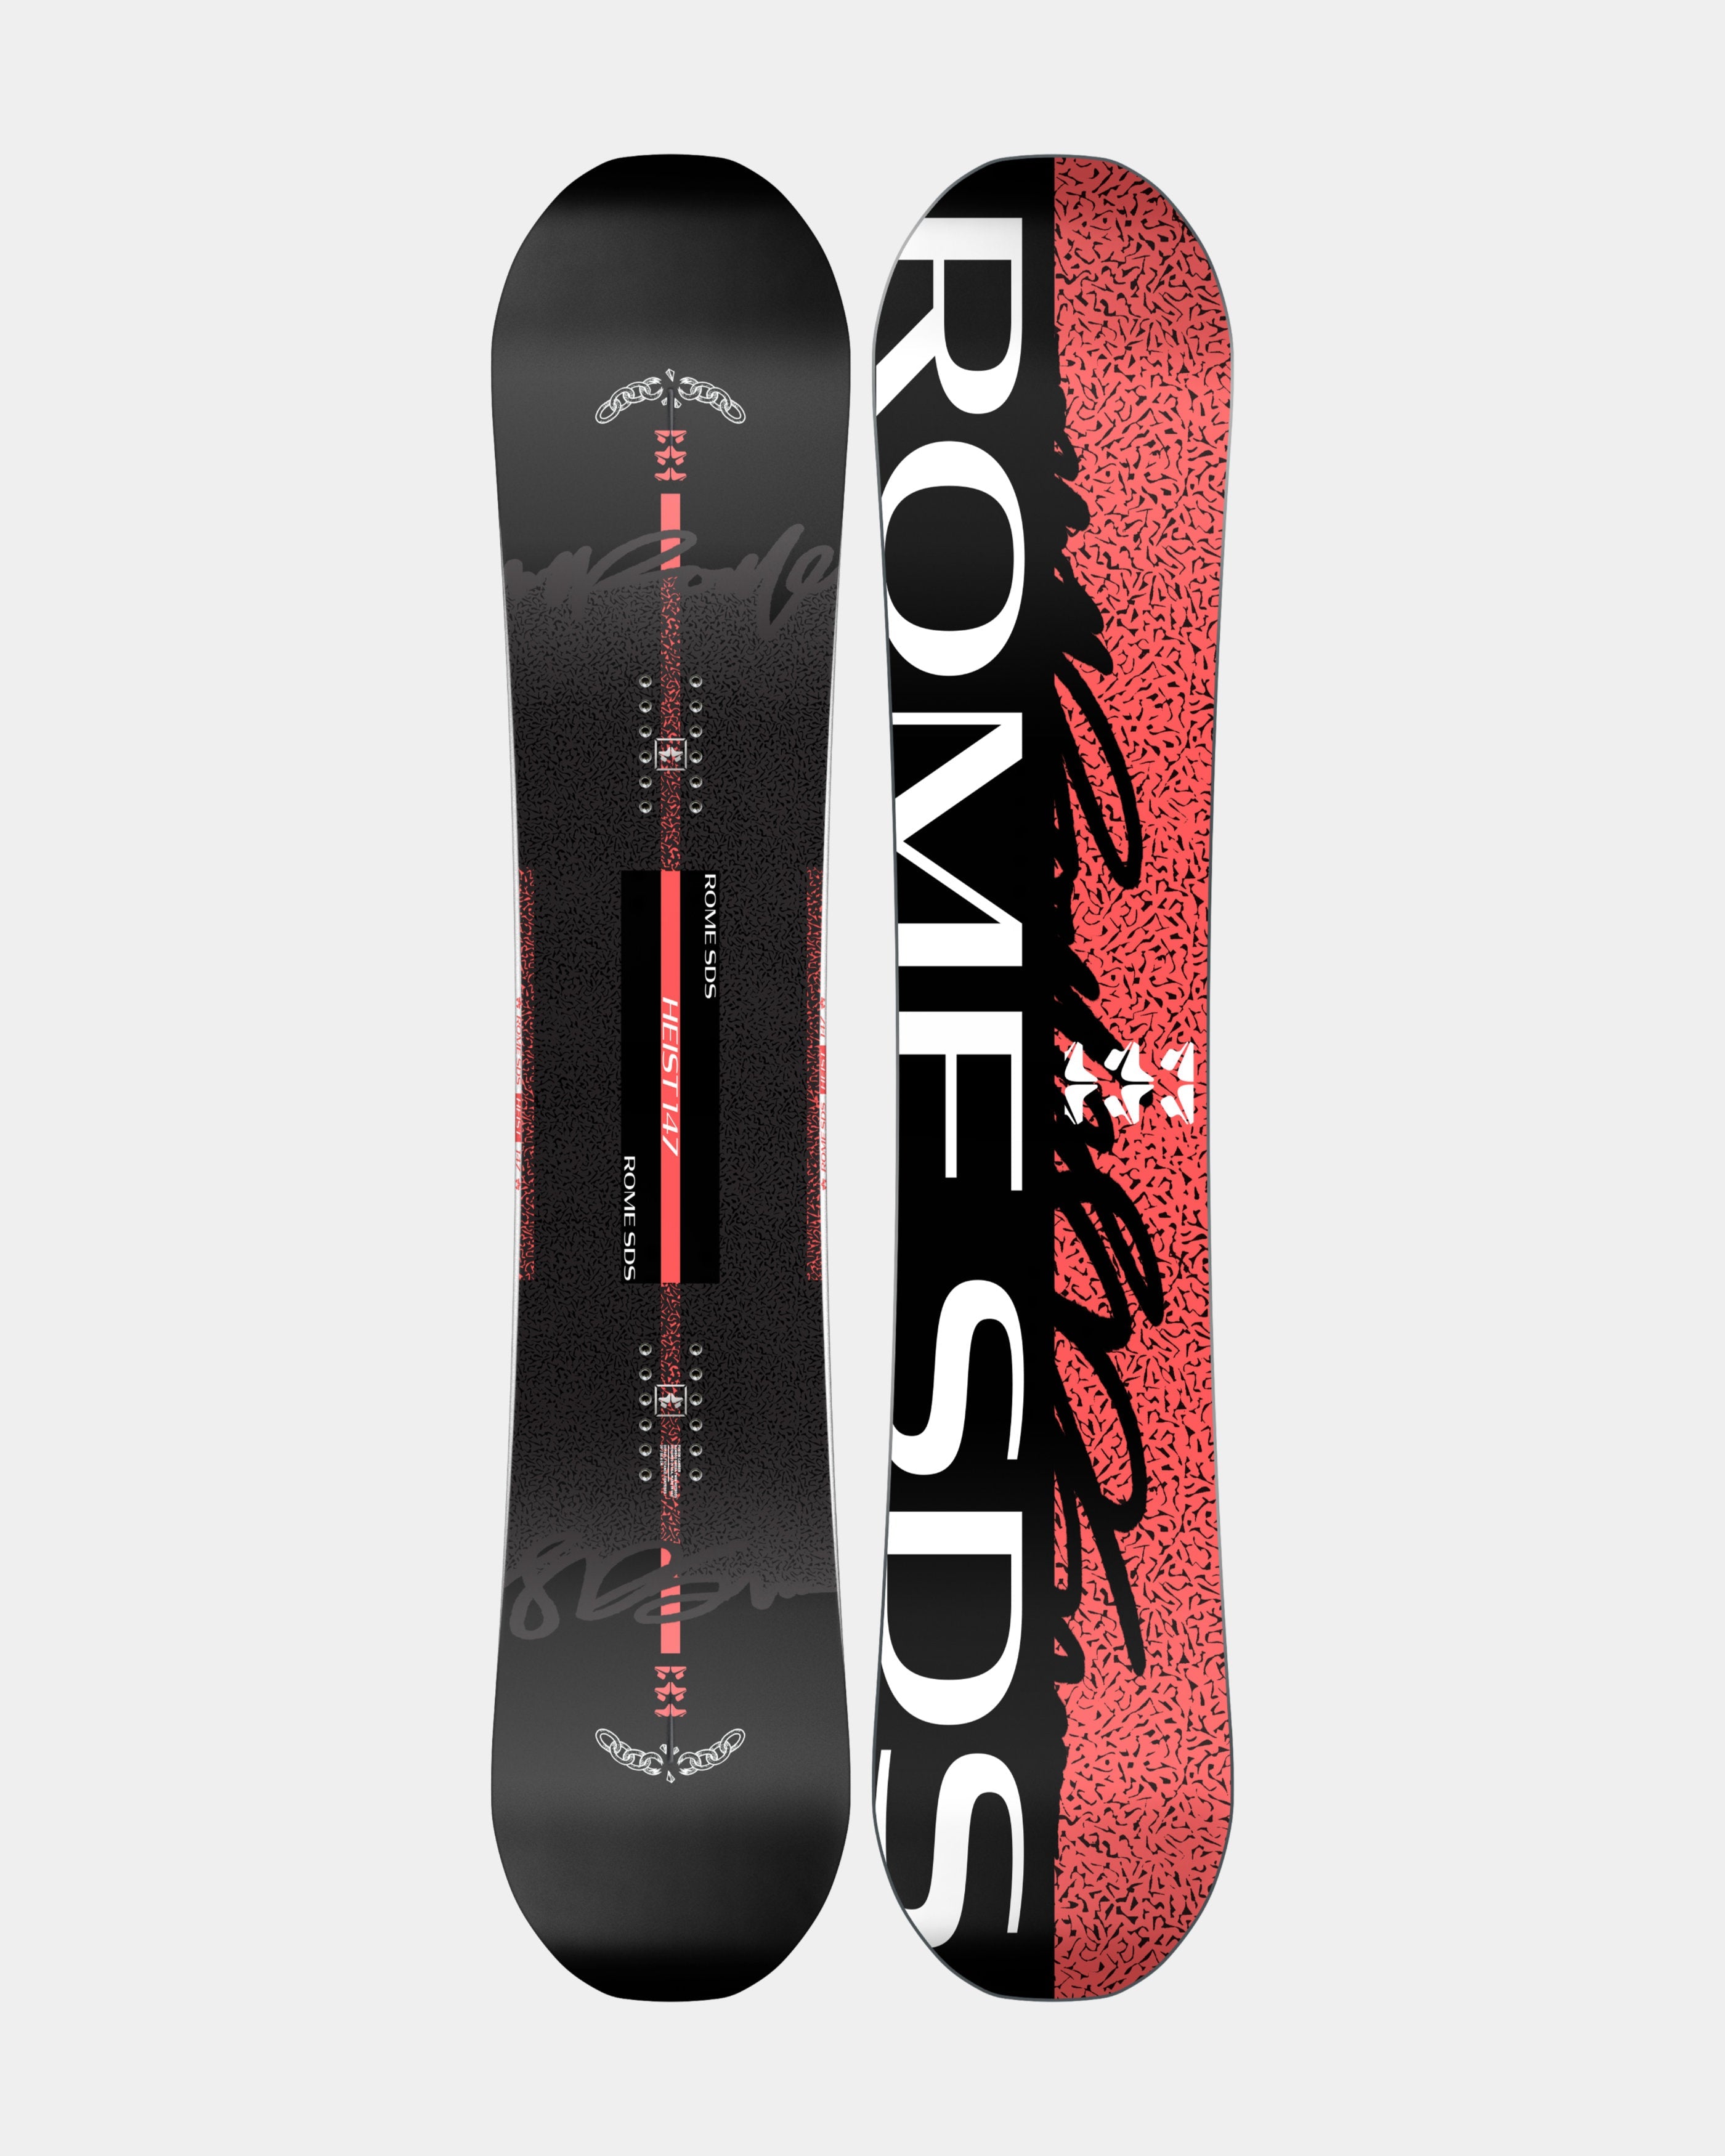 Snowboards – Rome SDS NA